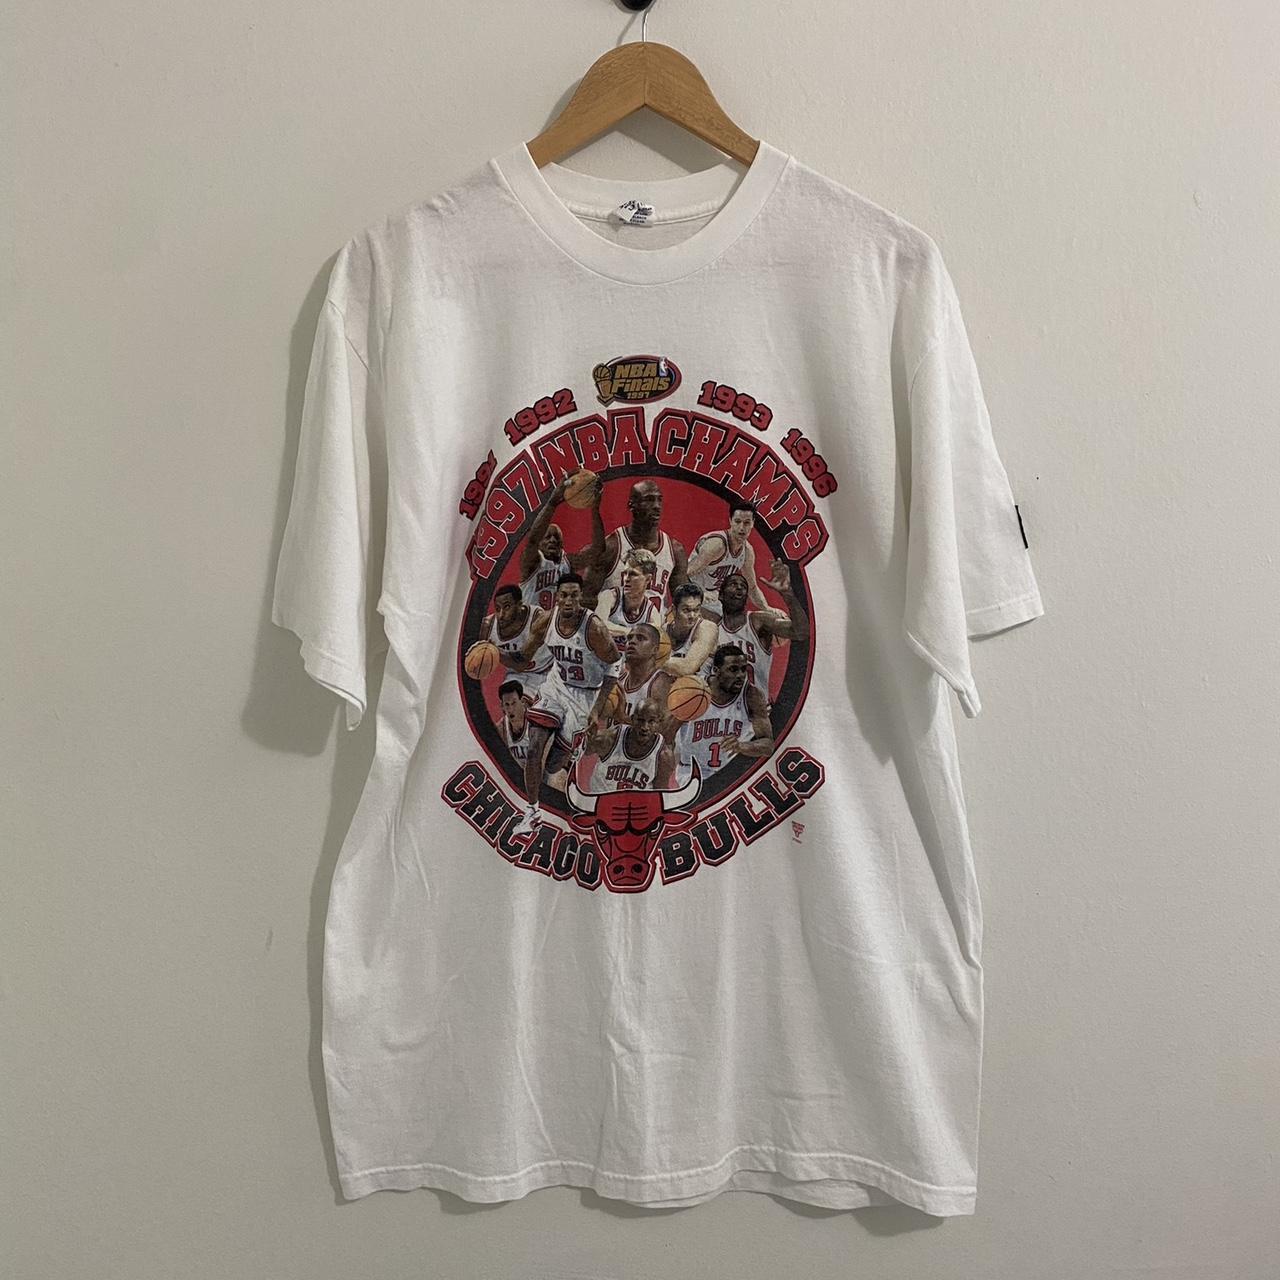 Vintage 1997 Chicago Bulls NBA Finals Champion Ring Shirt